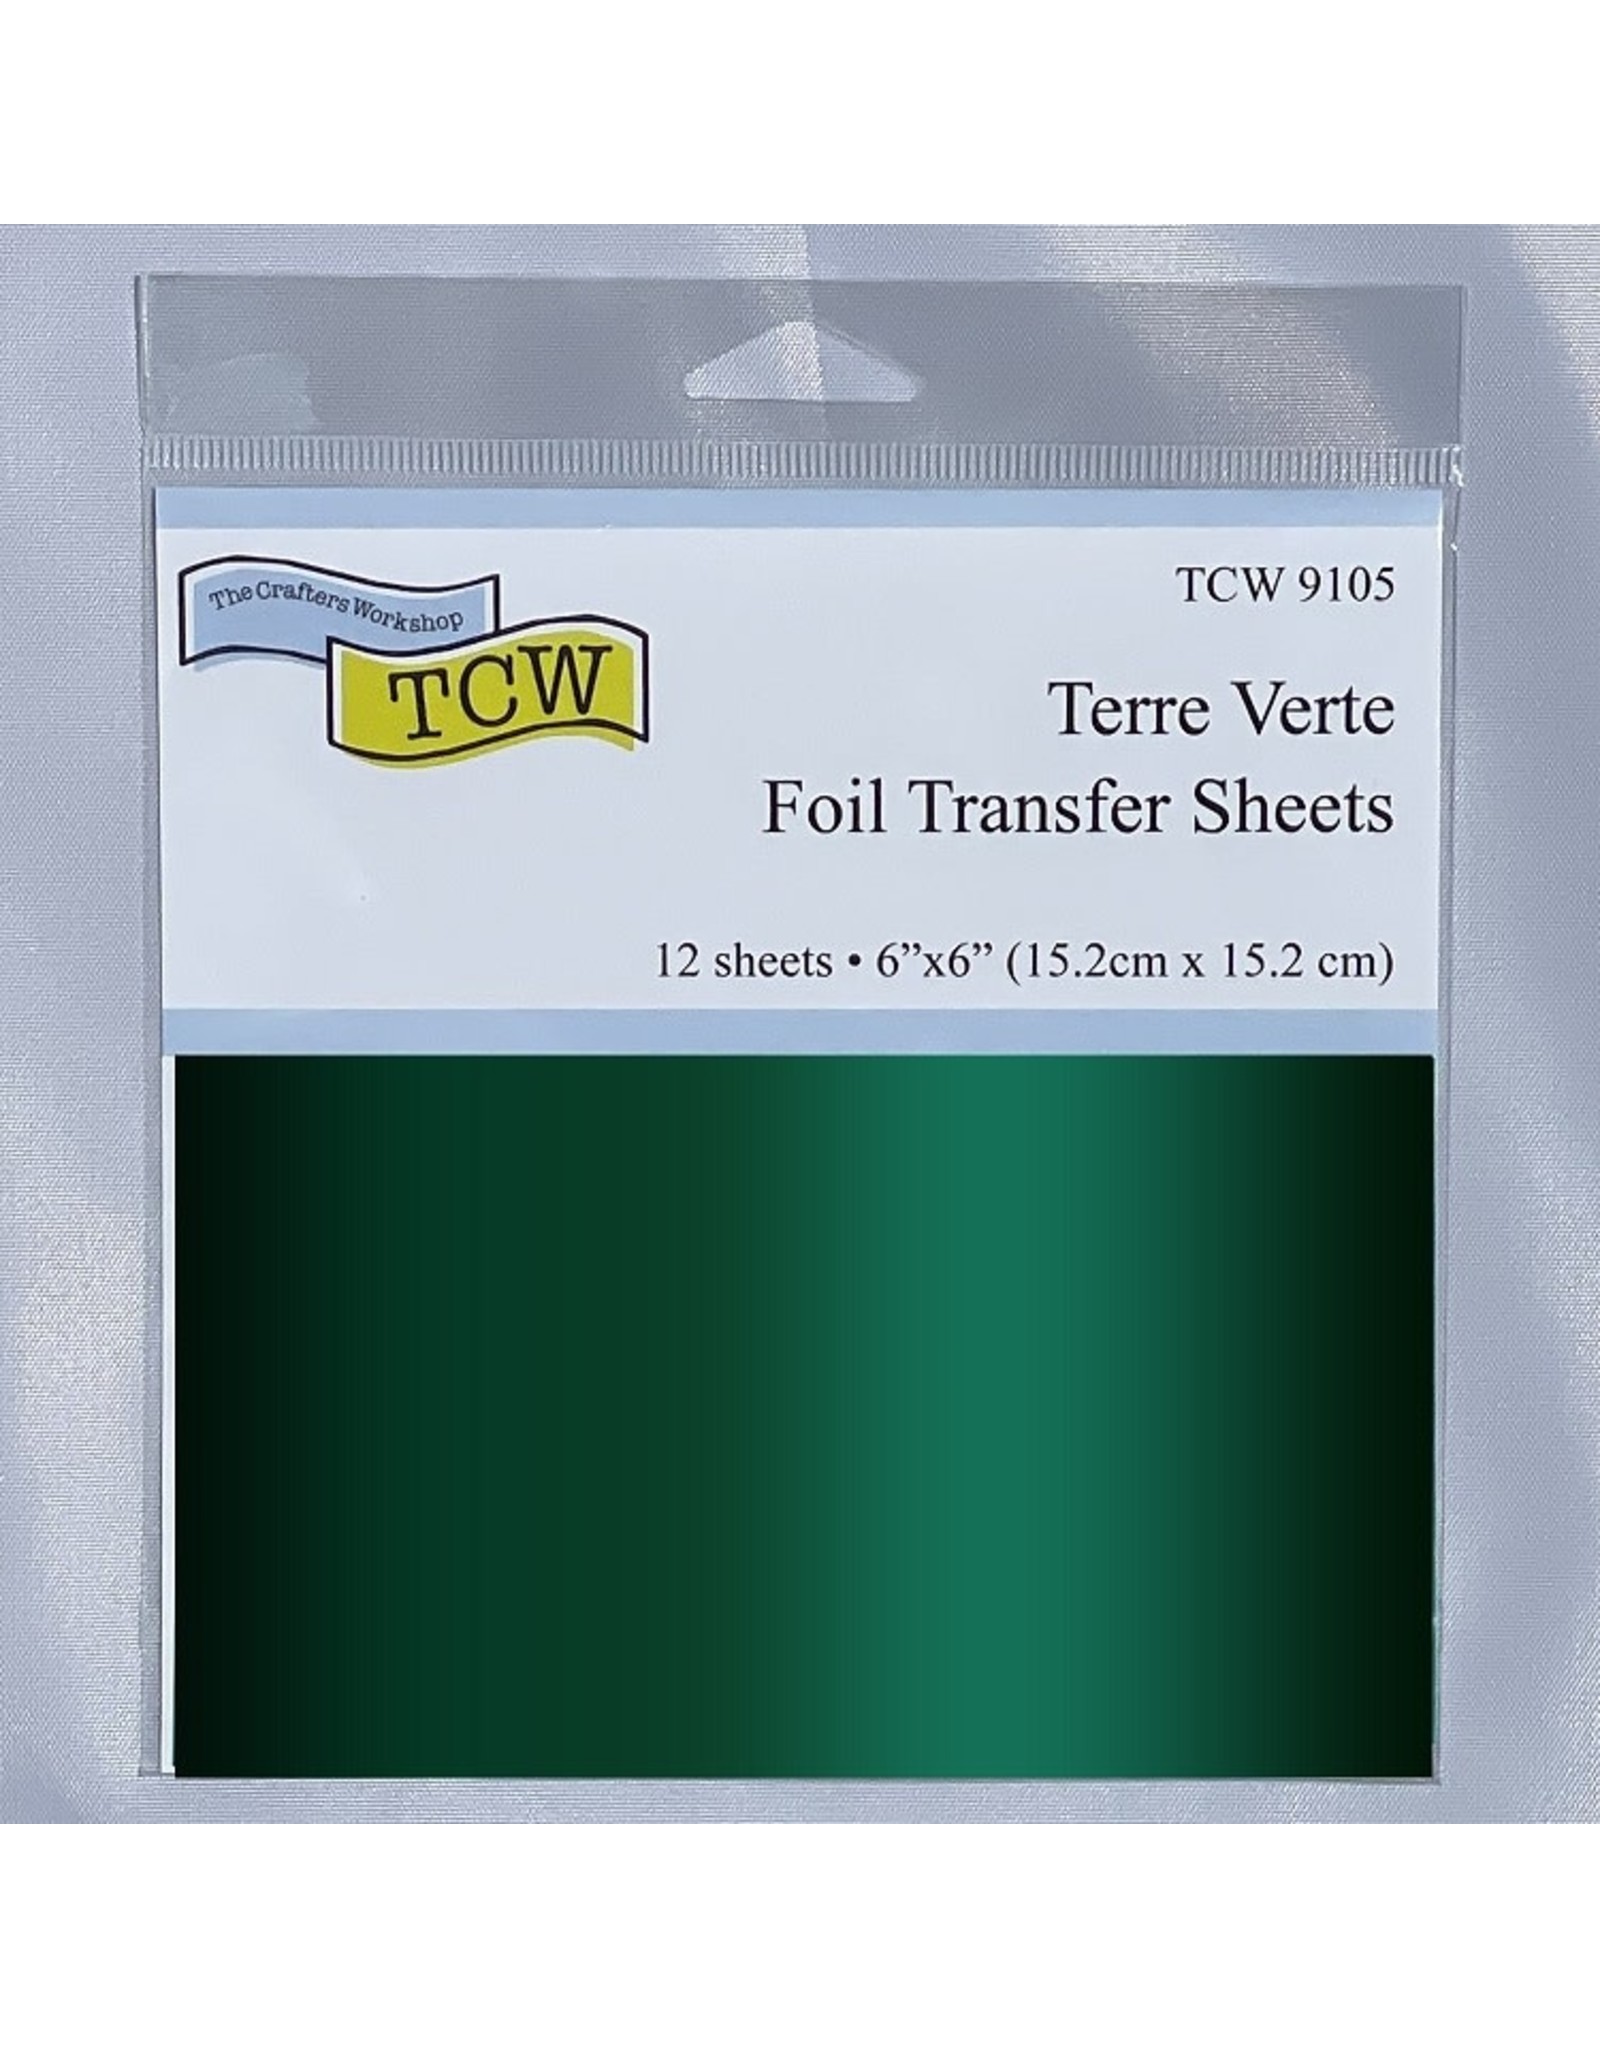 THE CRAFTERS WORKSHOP Foil Transfer Sheets 6x6 Terre Verte